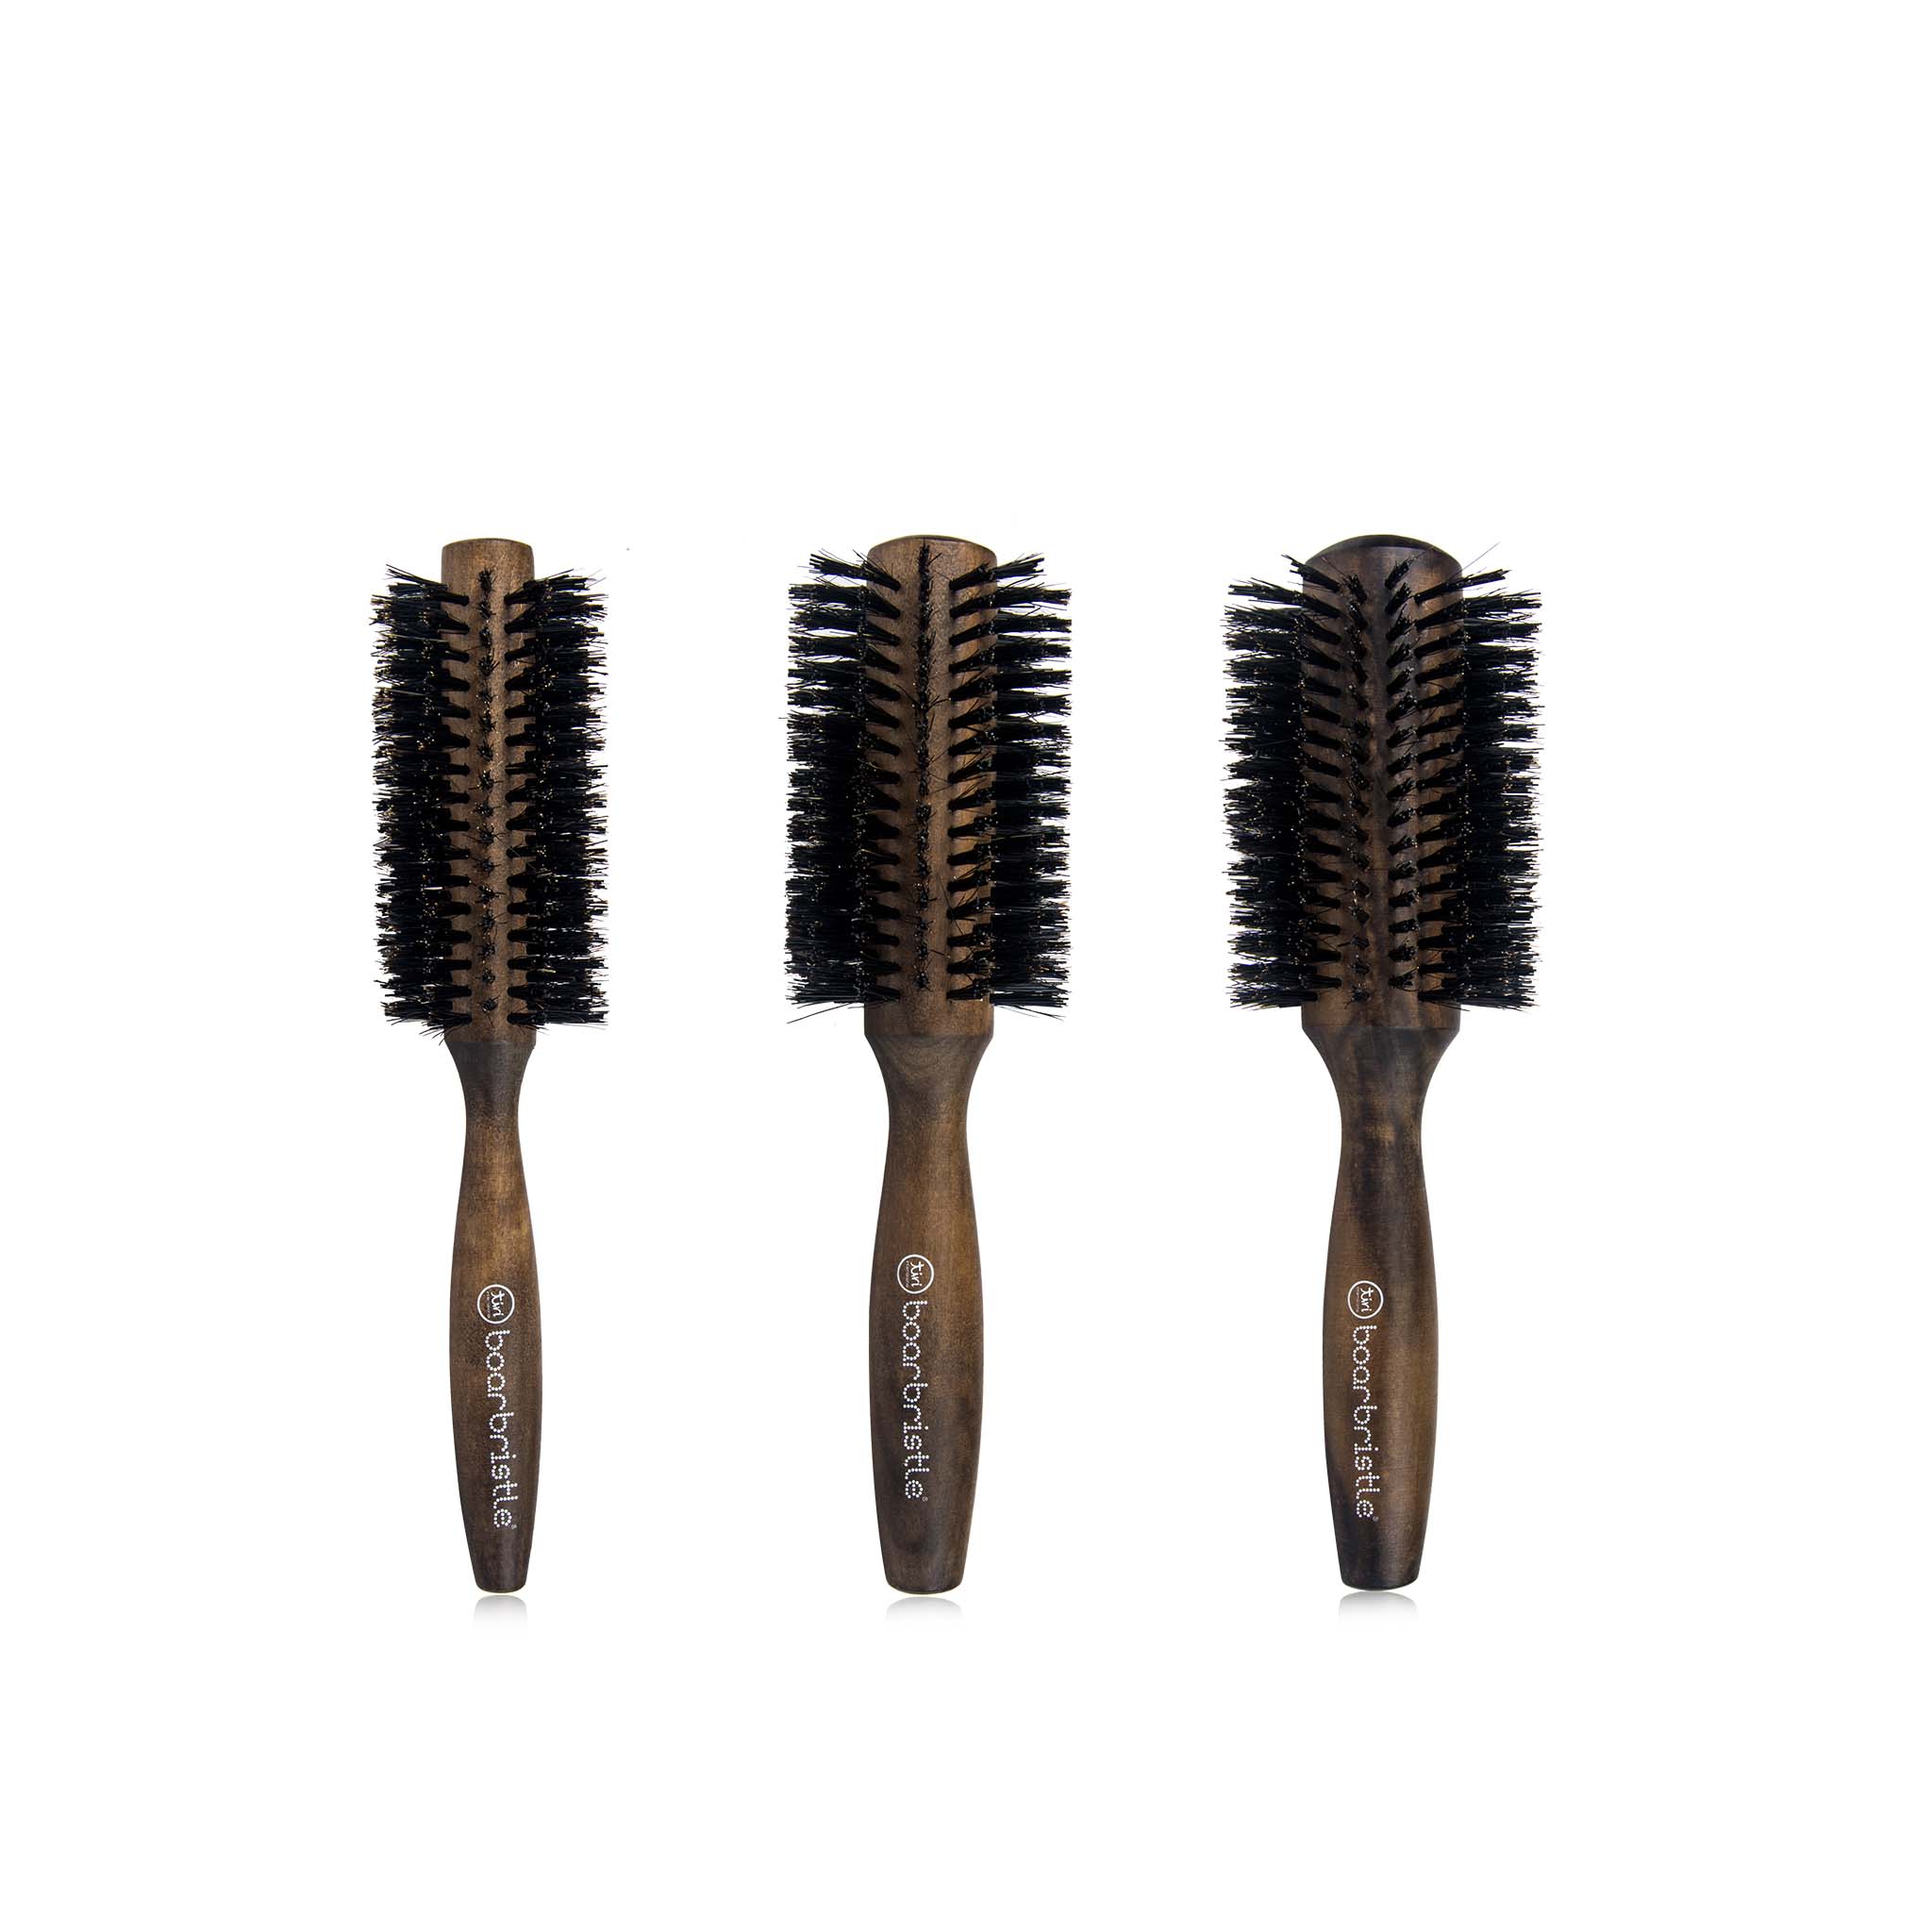 Boar Bristle Hairbrushes